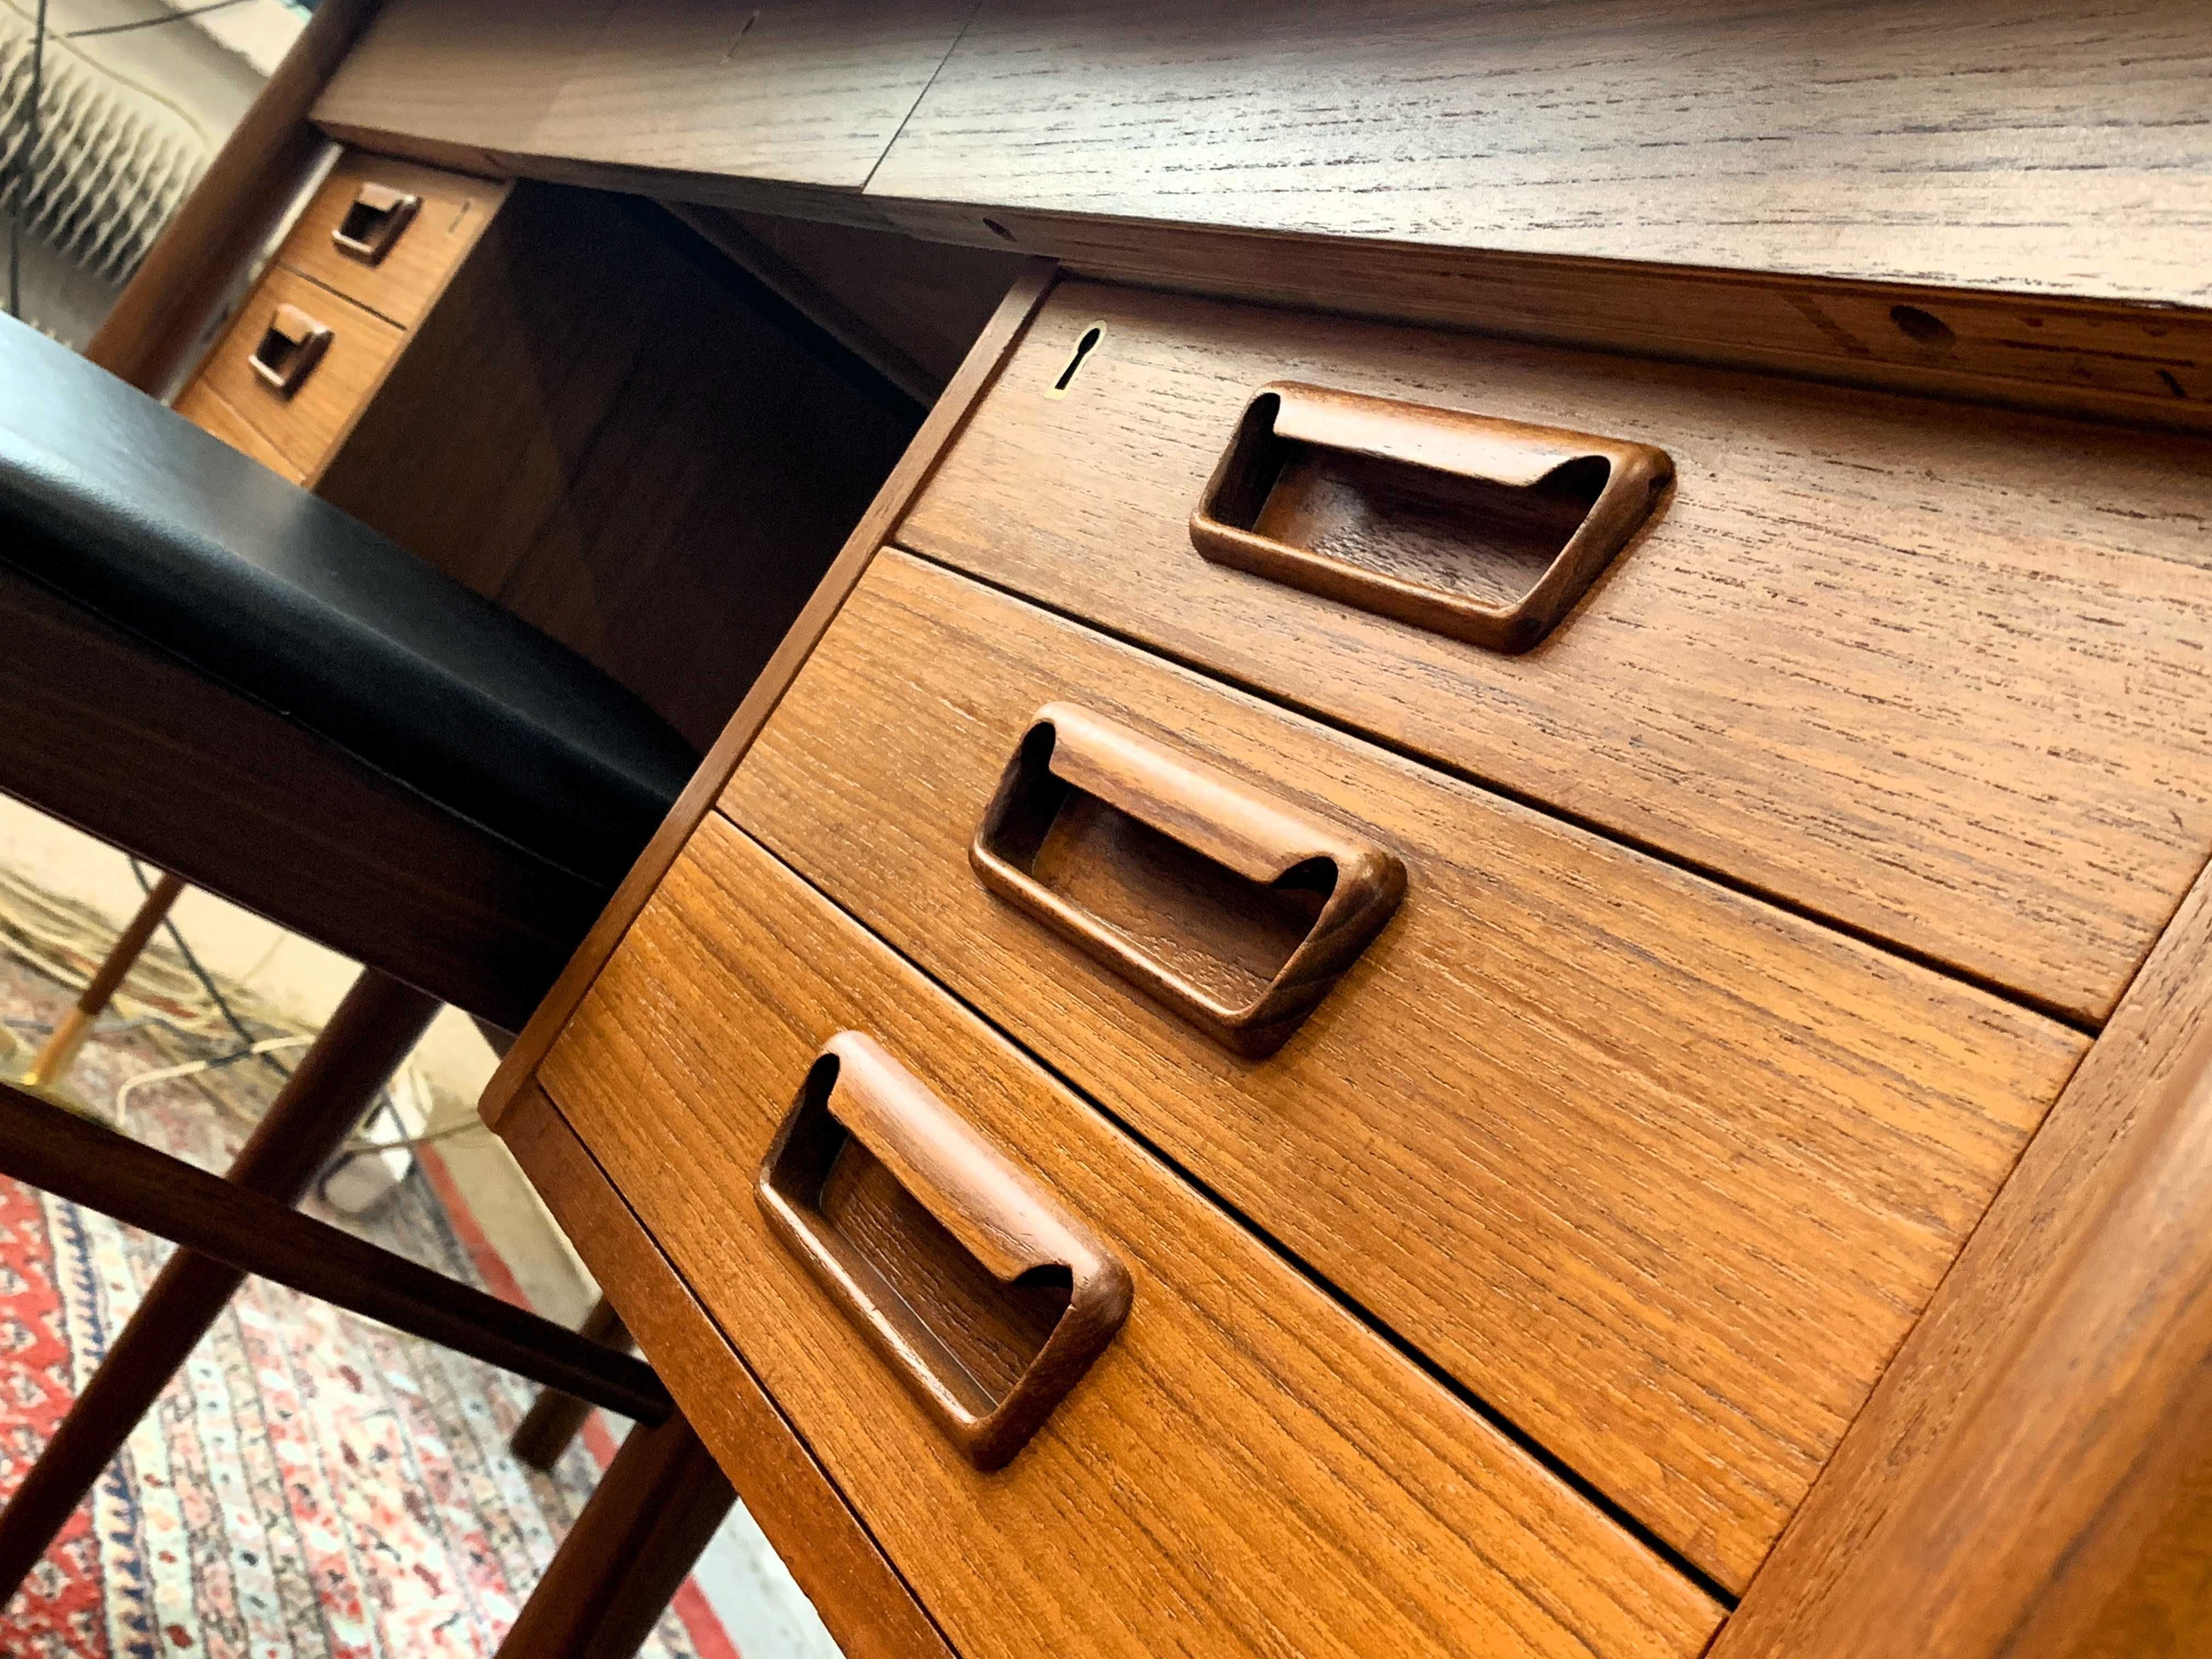 Wolnostojące biurko tekowe, Dania 60/70, vintage, mid-century modern.